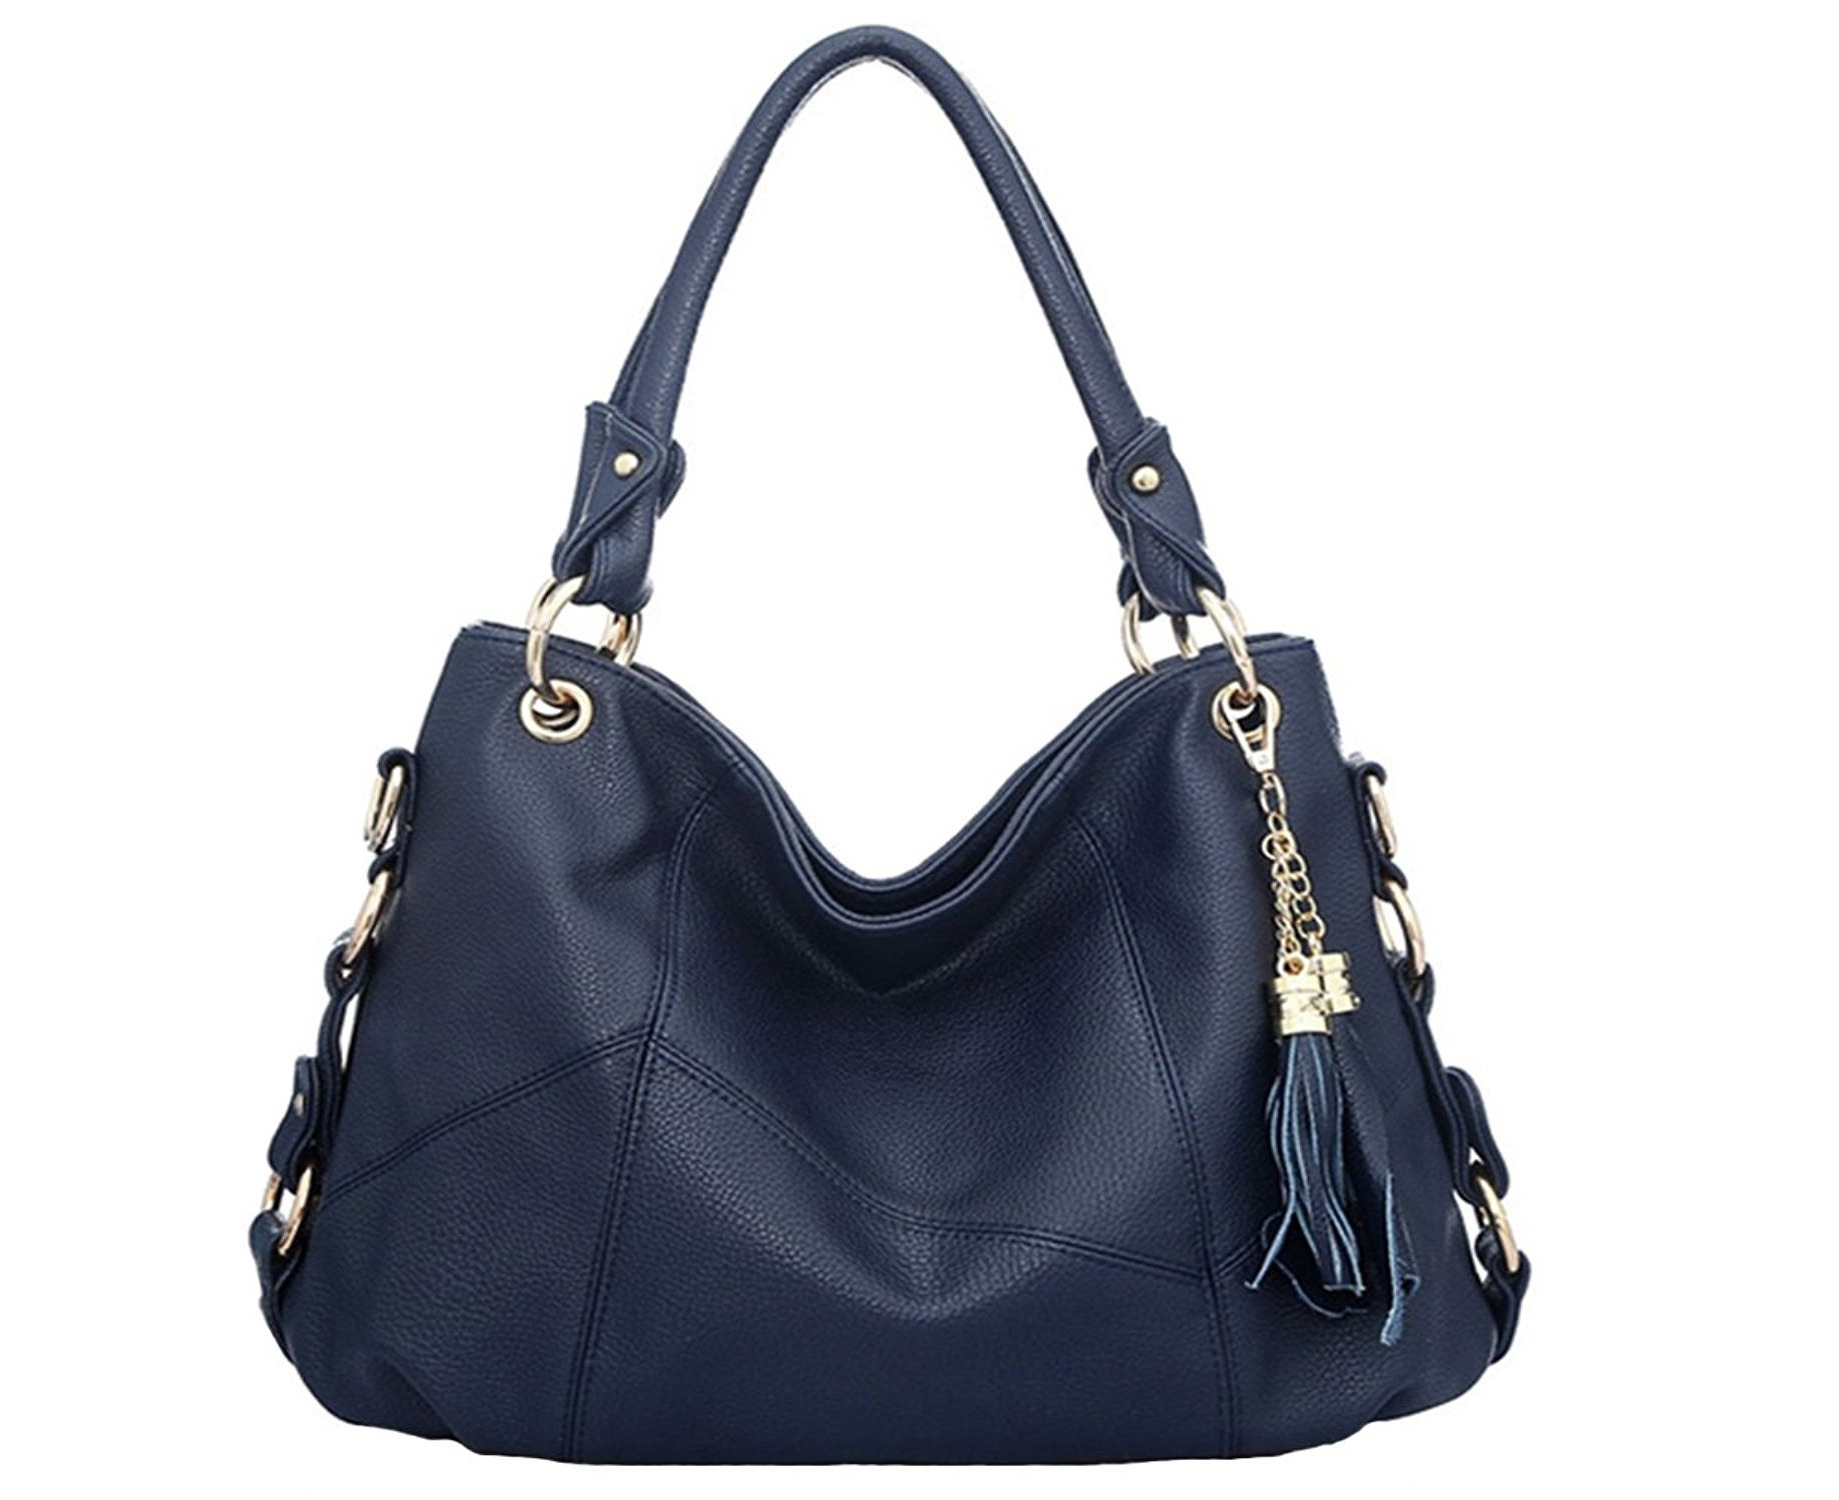 FiveloveTwo Nylon Hobo Top-handle Bags Shoulder Crossbody Bag Totes Satchels Clutches Handbags and Purses 